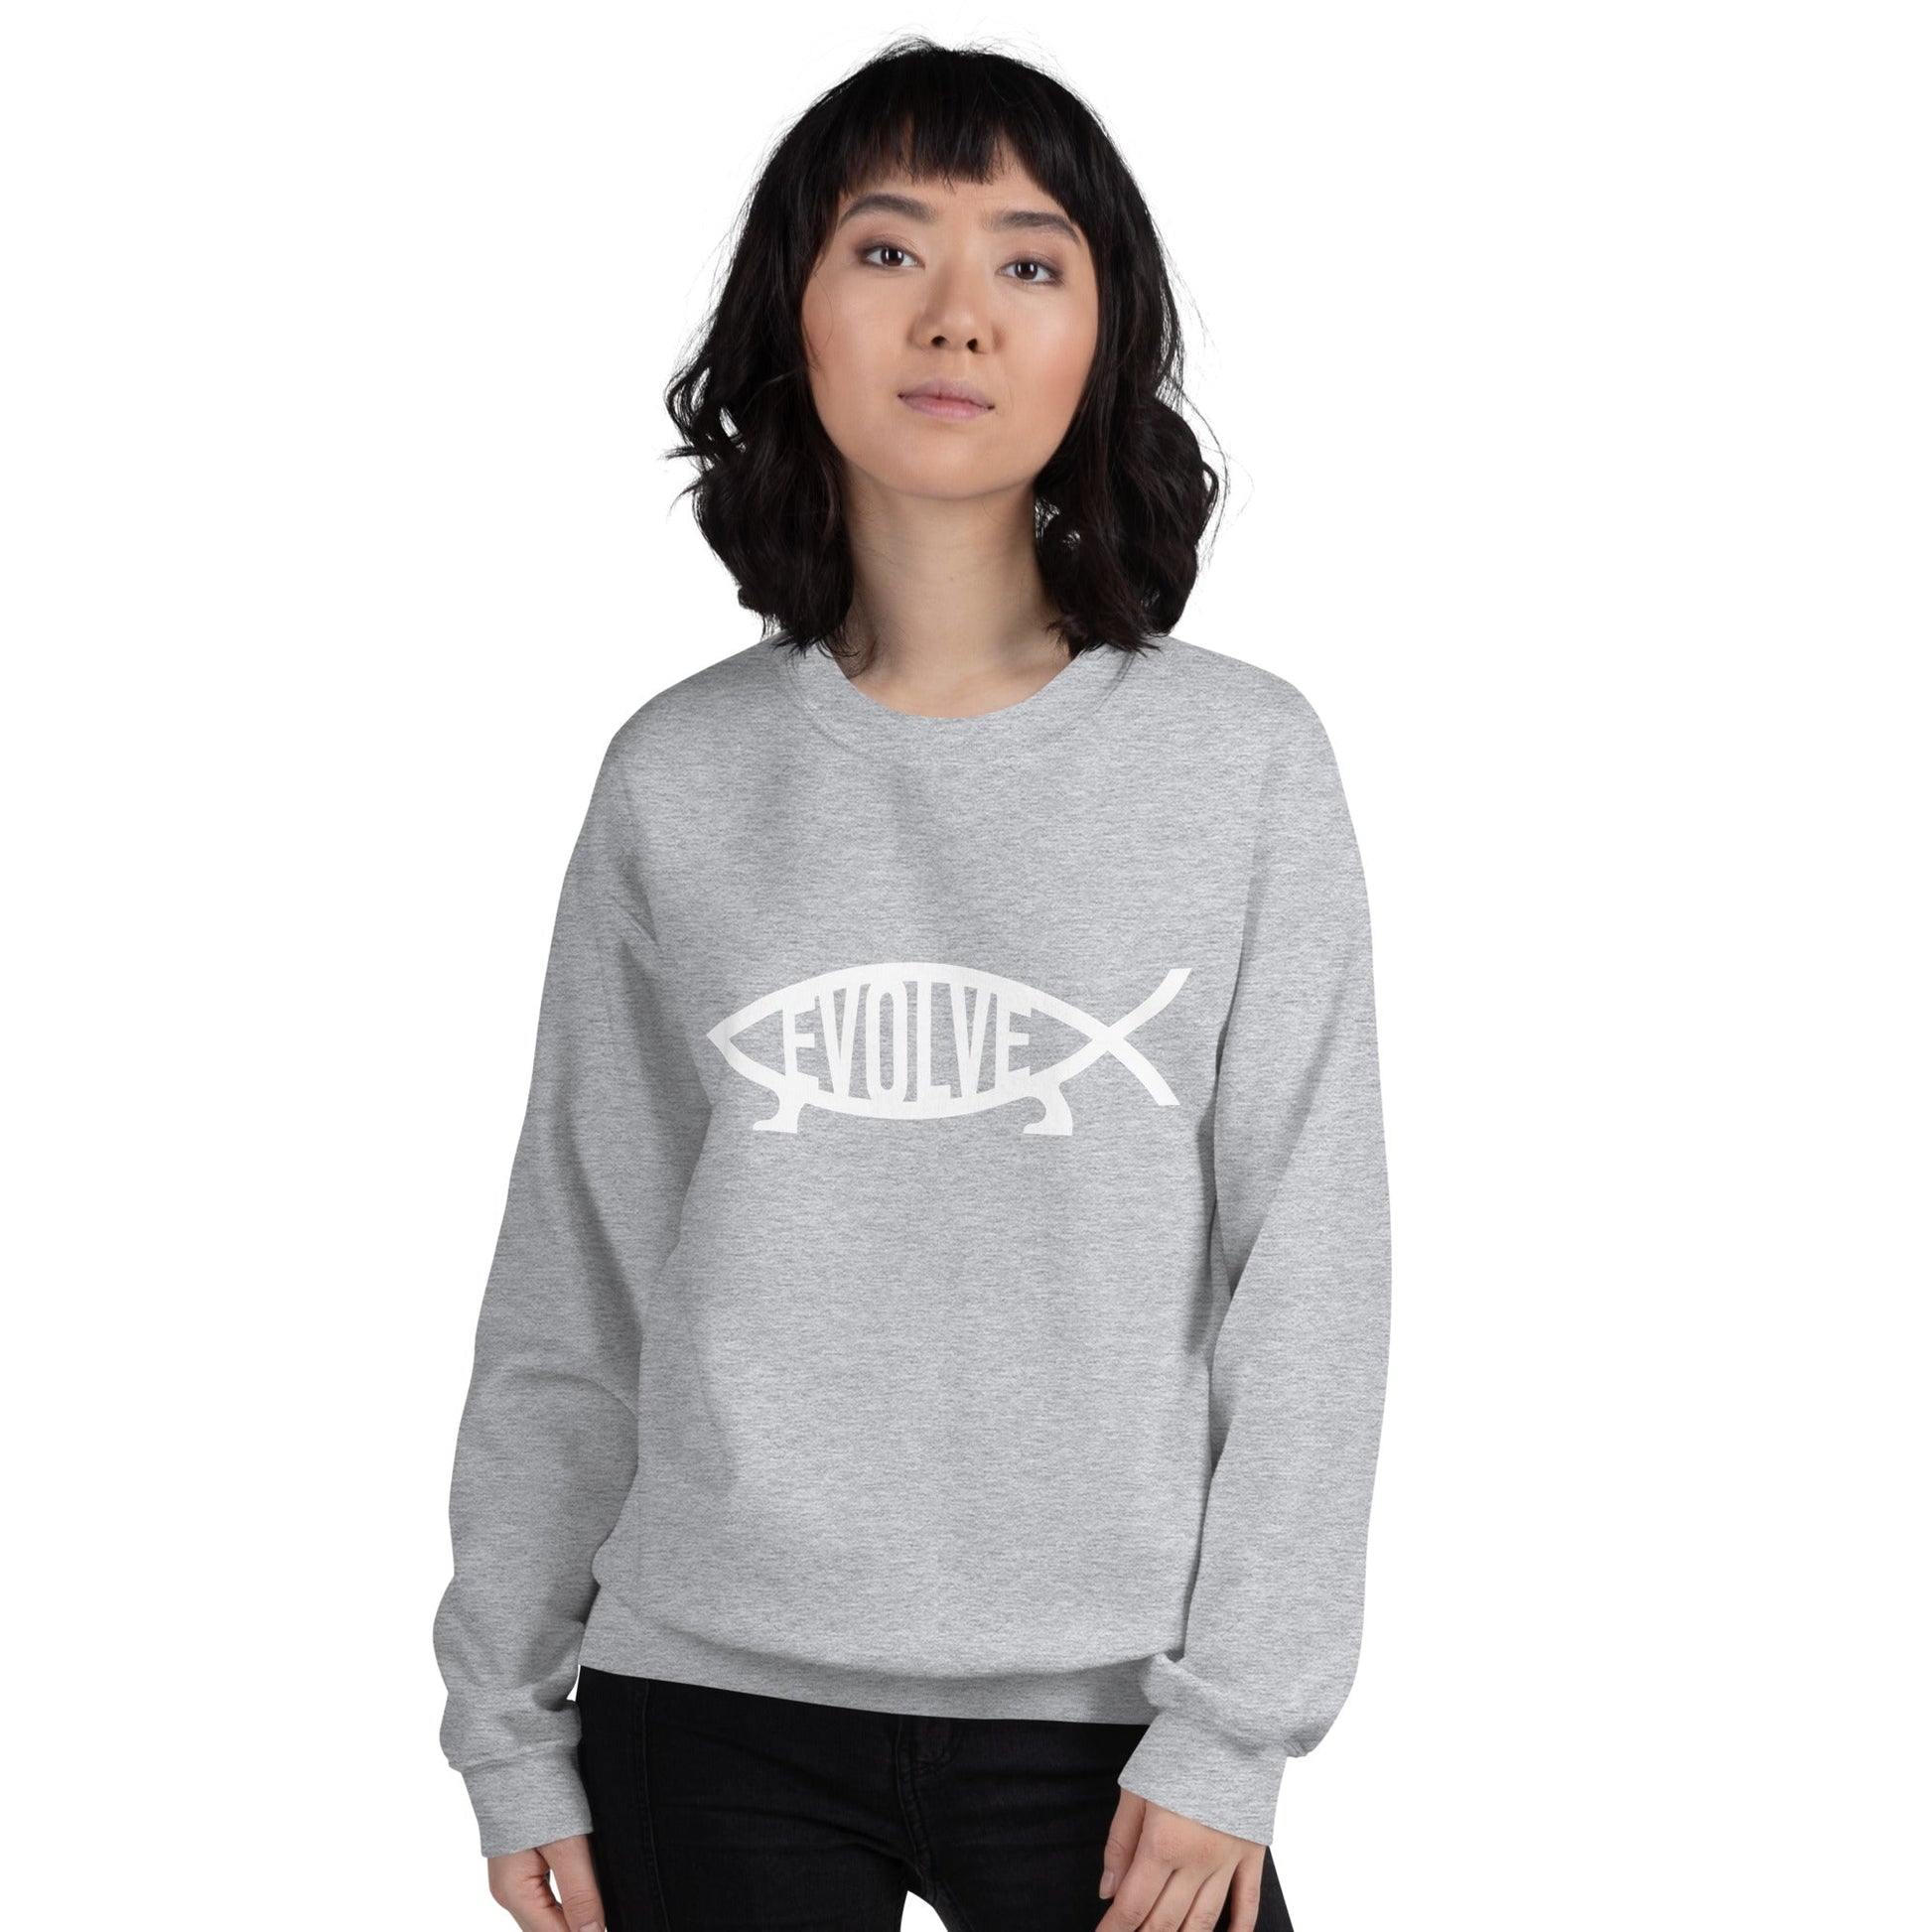 Darwin - Evolve - Sweatshirt